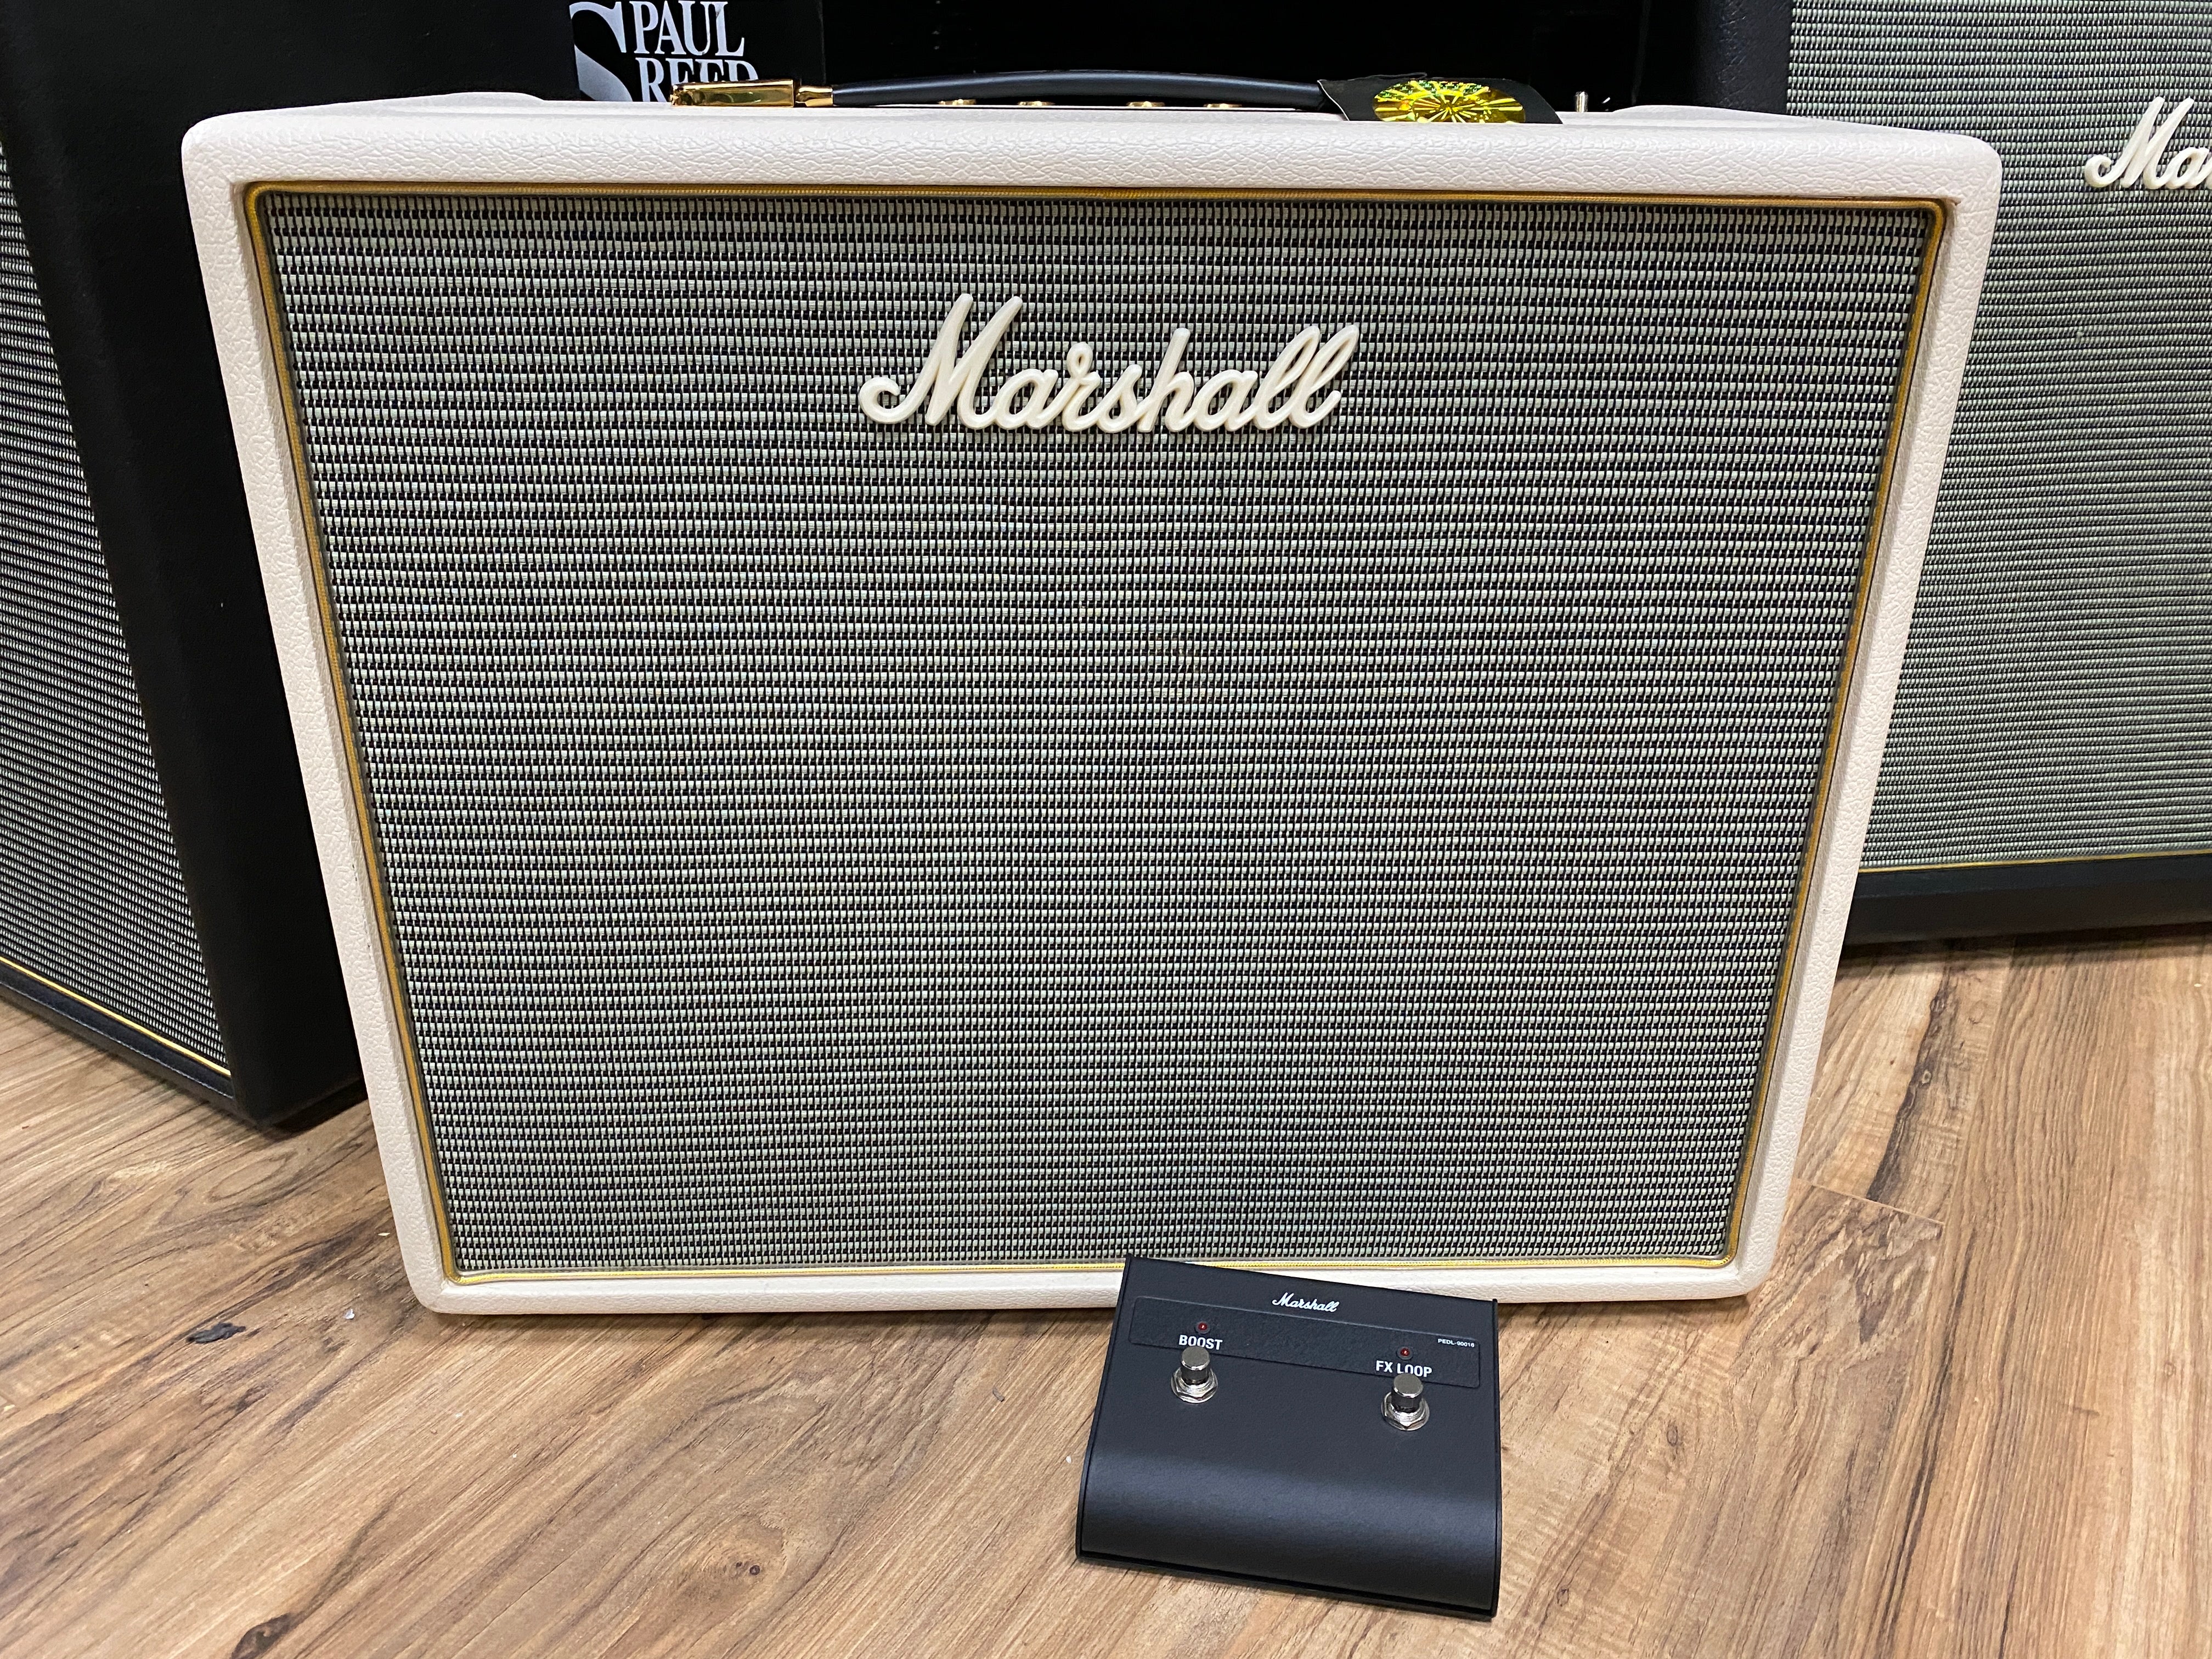 Buy Marshall Origin ORI20C 20-Watt 1x10” Guitar Combo Amplifier